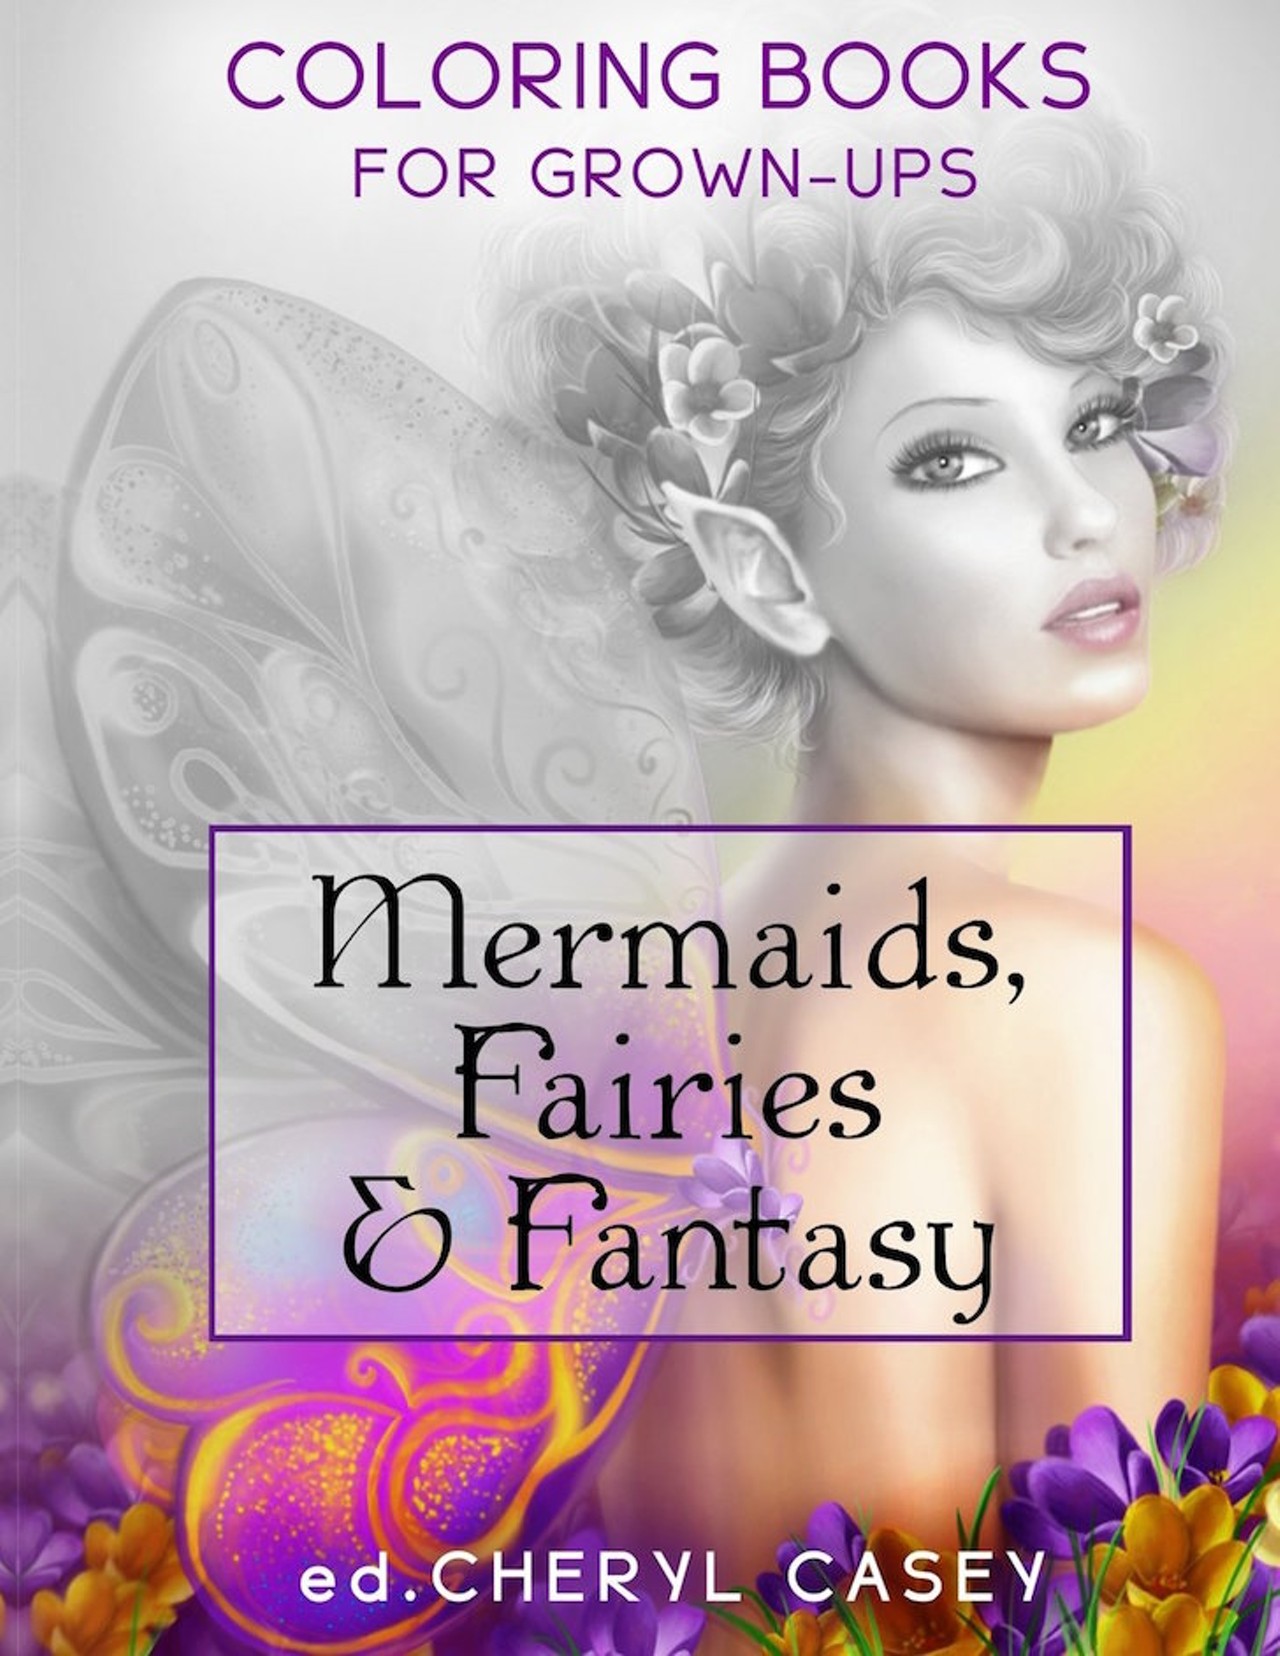  Mermaids, Fairies & Fantasy
Sure, why not? 
Buy it at amazon.com 